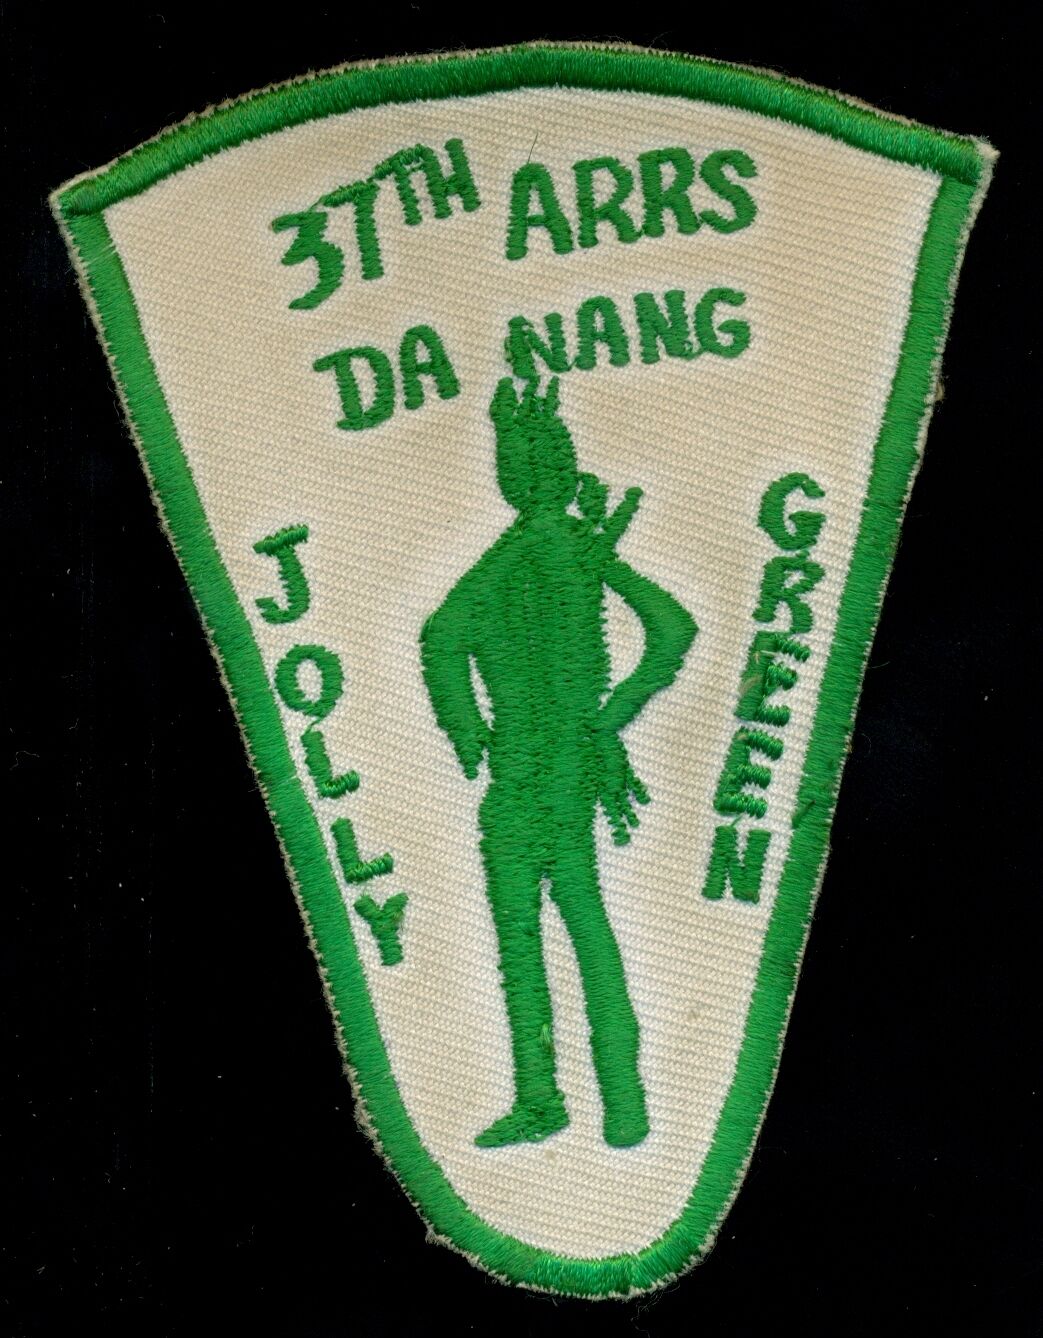 USAF 37th ARRS Da Nang Vietnam Jolly Green Rescue Patch S-11